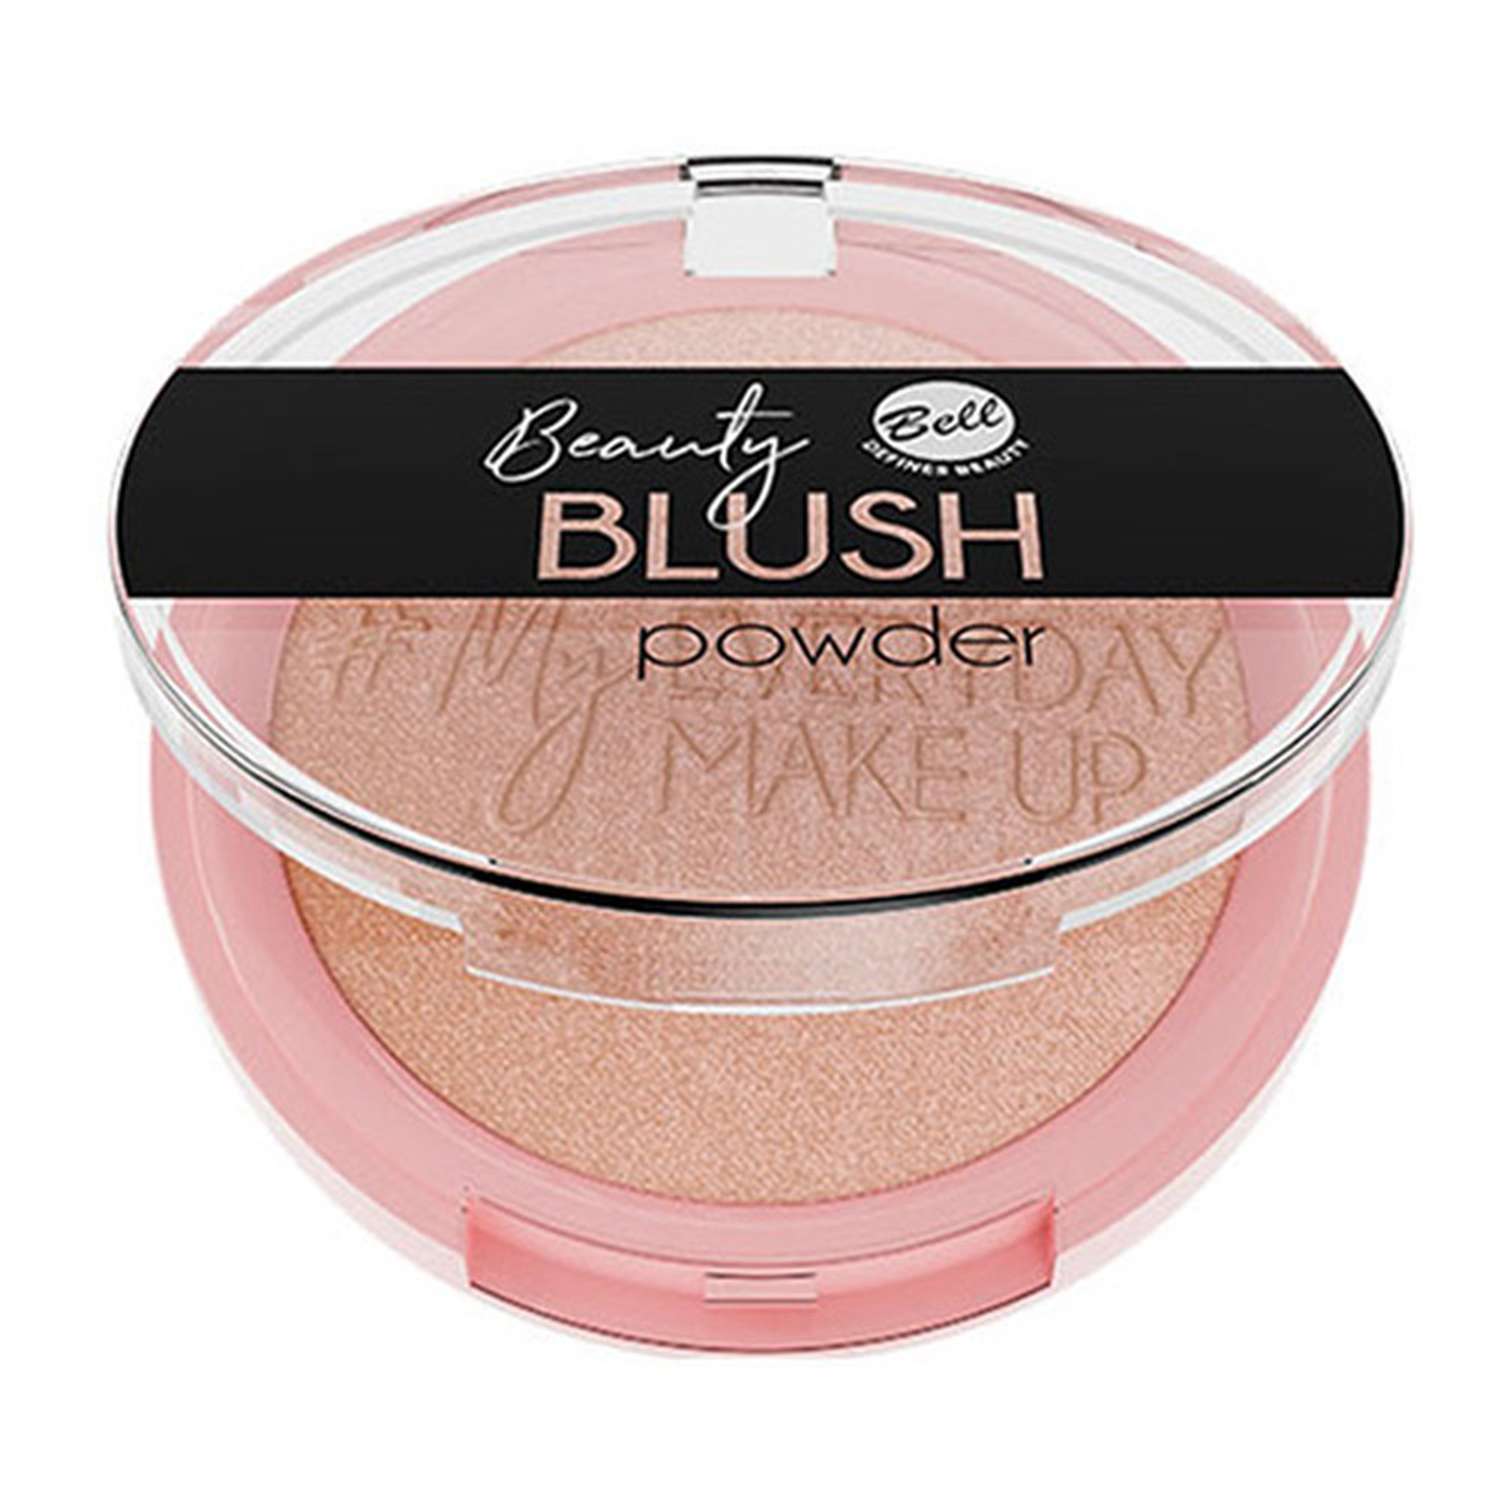 Румяна Bell компактные Beauty blush powder тон 02 - фото 4